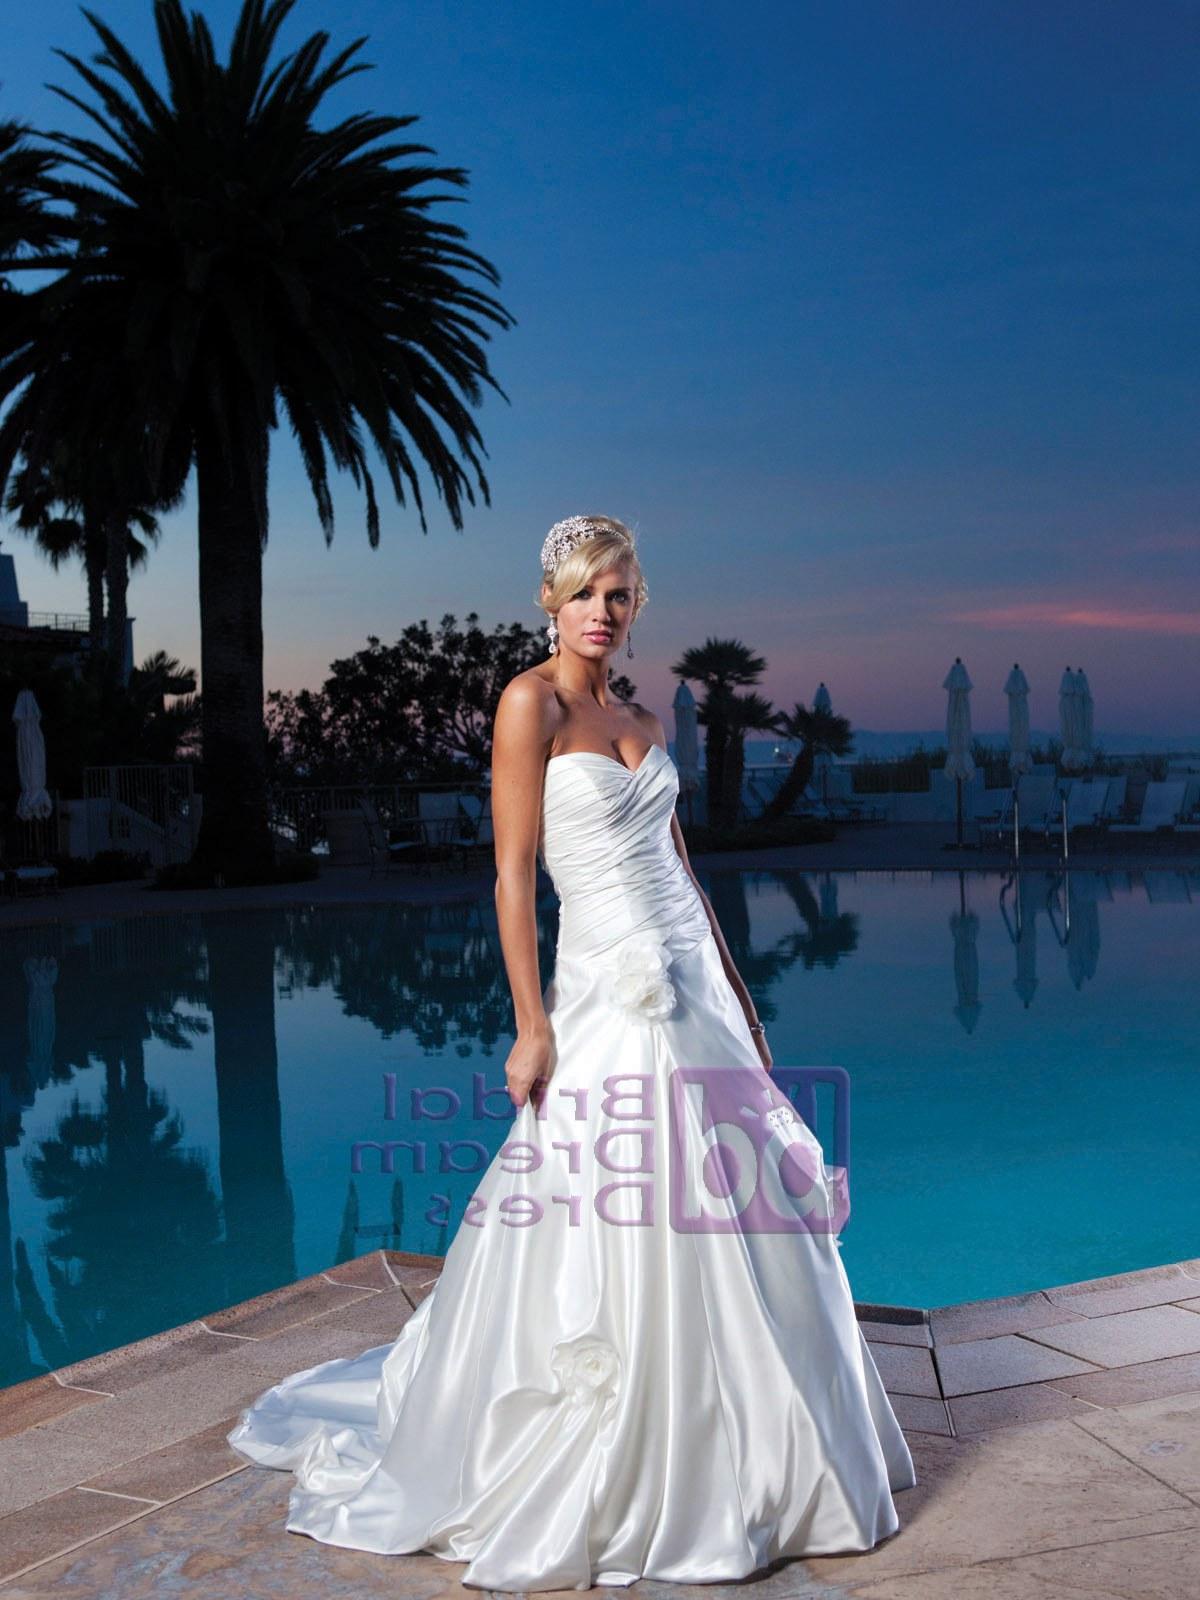 wedding dresses sweetheart neckline ball gown ruffles Kathy Ireland by 2be Bridal Wedding Dress 231163